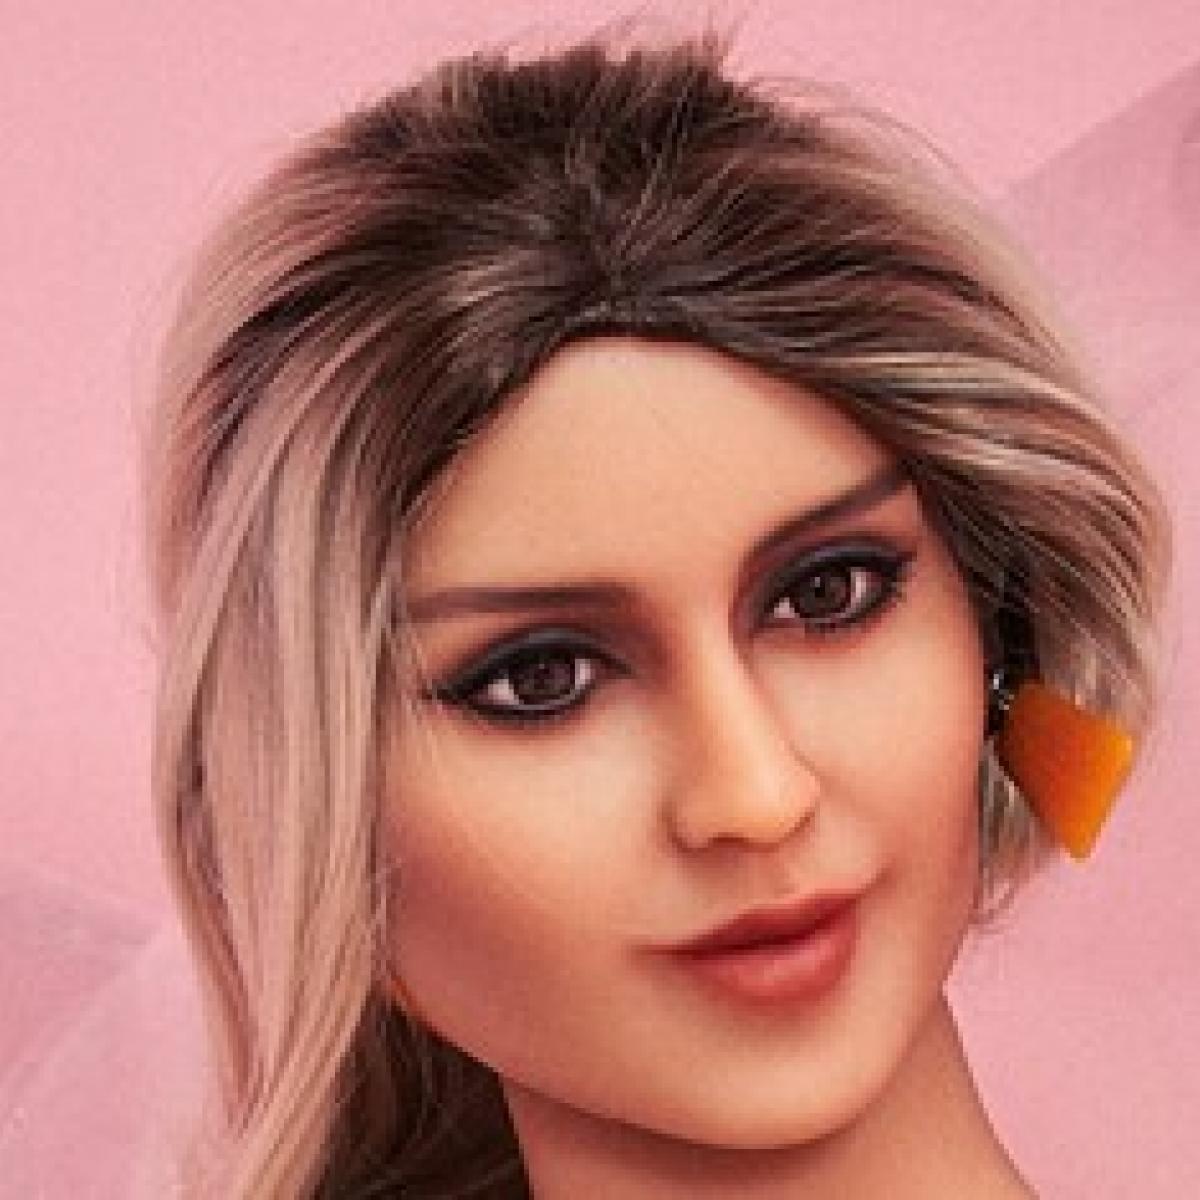 Neodoll Racy Jessica - Sex Doll Head - M16 Compatible - Tan